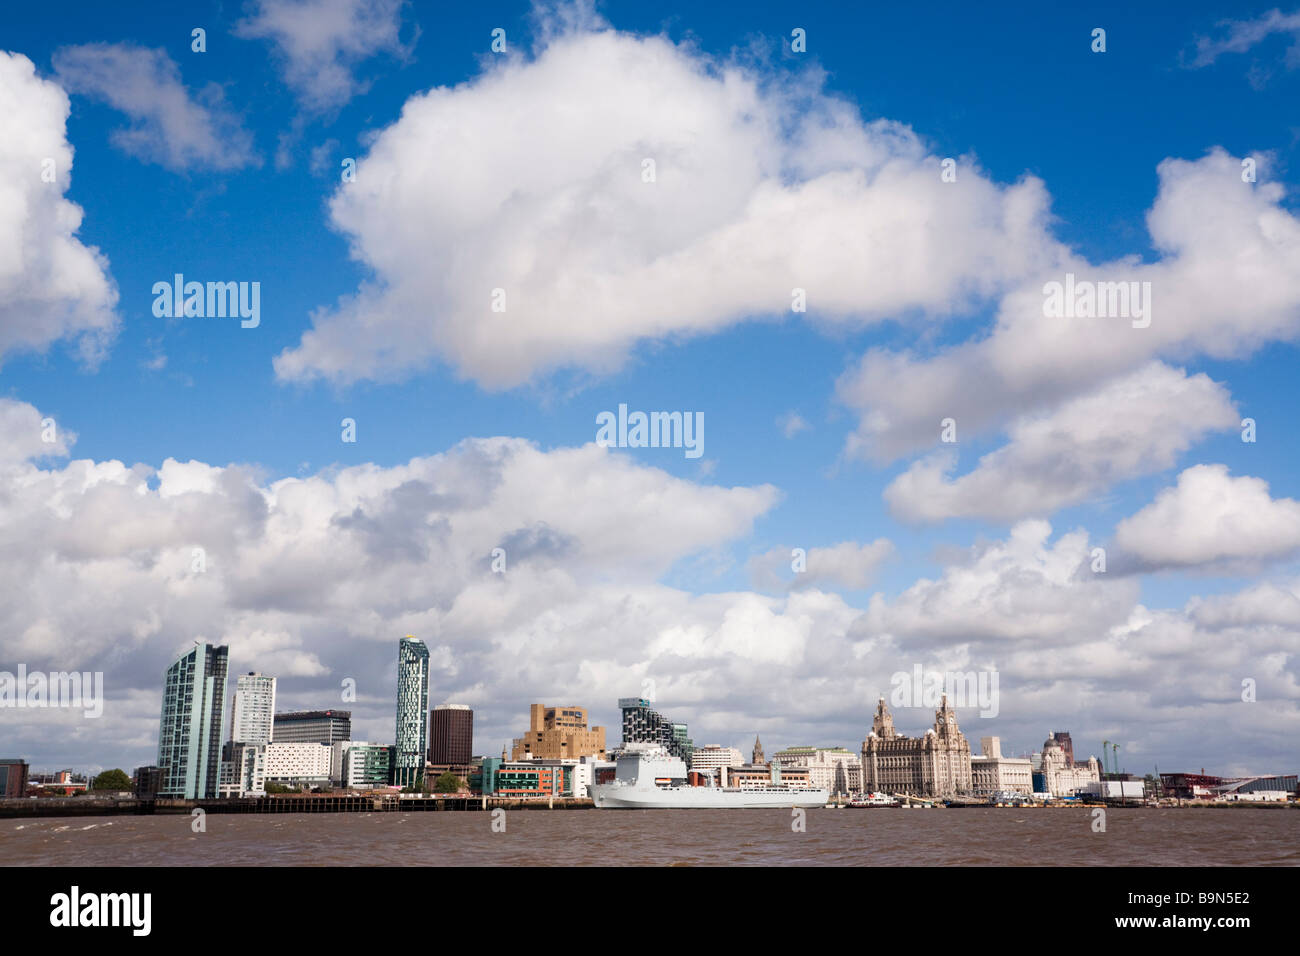 Liverpool Merseyside England UK City skyline buildings across River Mersey Stock Photo